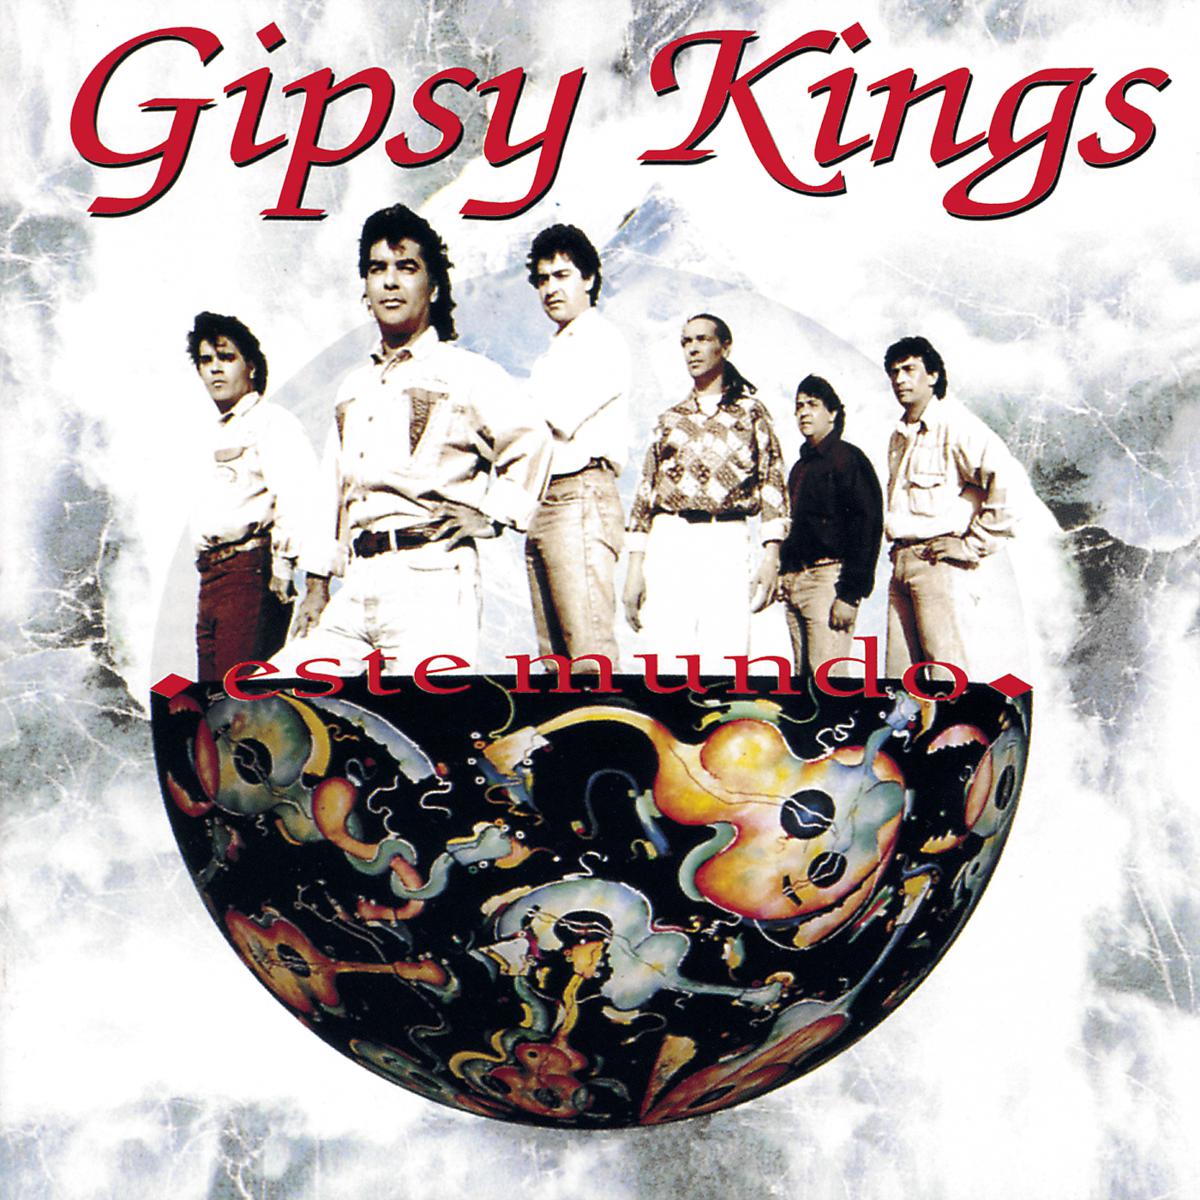 Gipsy kings песни. Джипси Кингс. Gipsy Kings обложка. Gipsy Kings фото. Gipsy Kings "Greatest Hits".